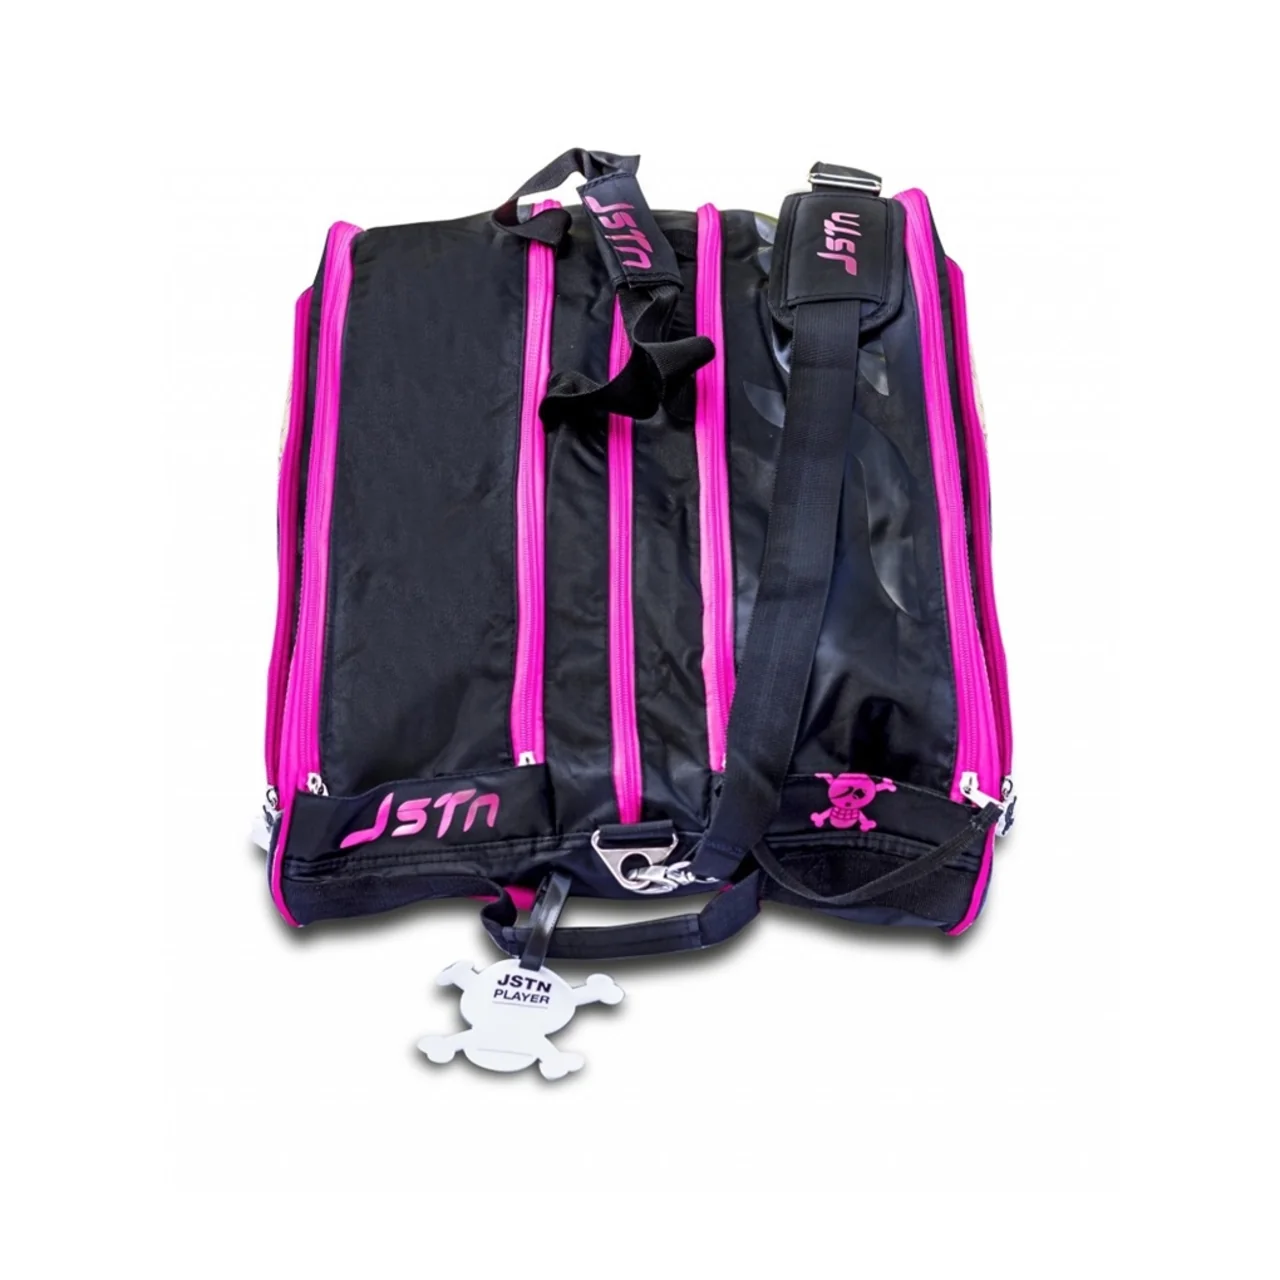 Just Ten K-Evo Bag Black/Pink